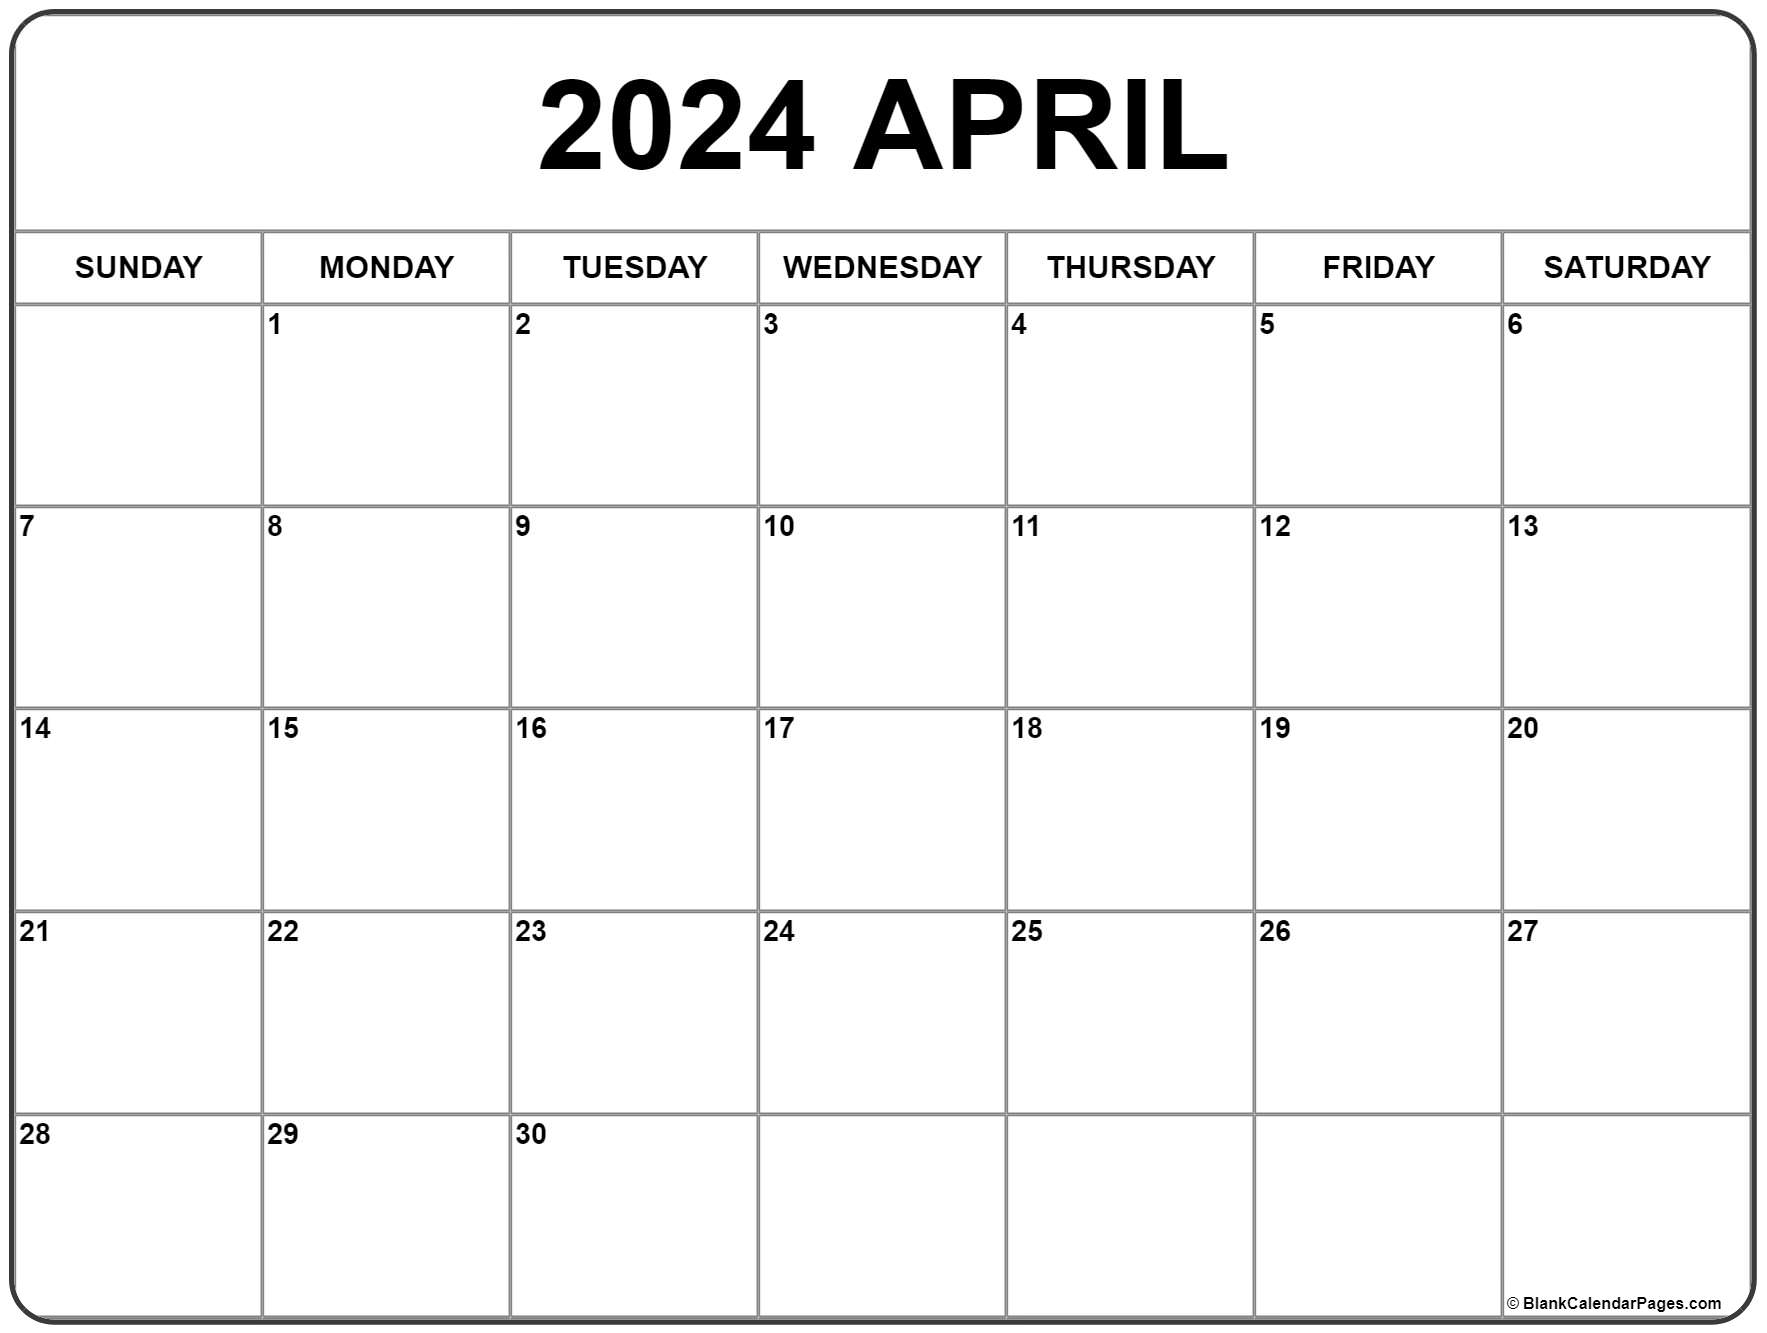 April 2024 Calendar | Free Printable Calendar in Free Calendar April 2024